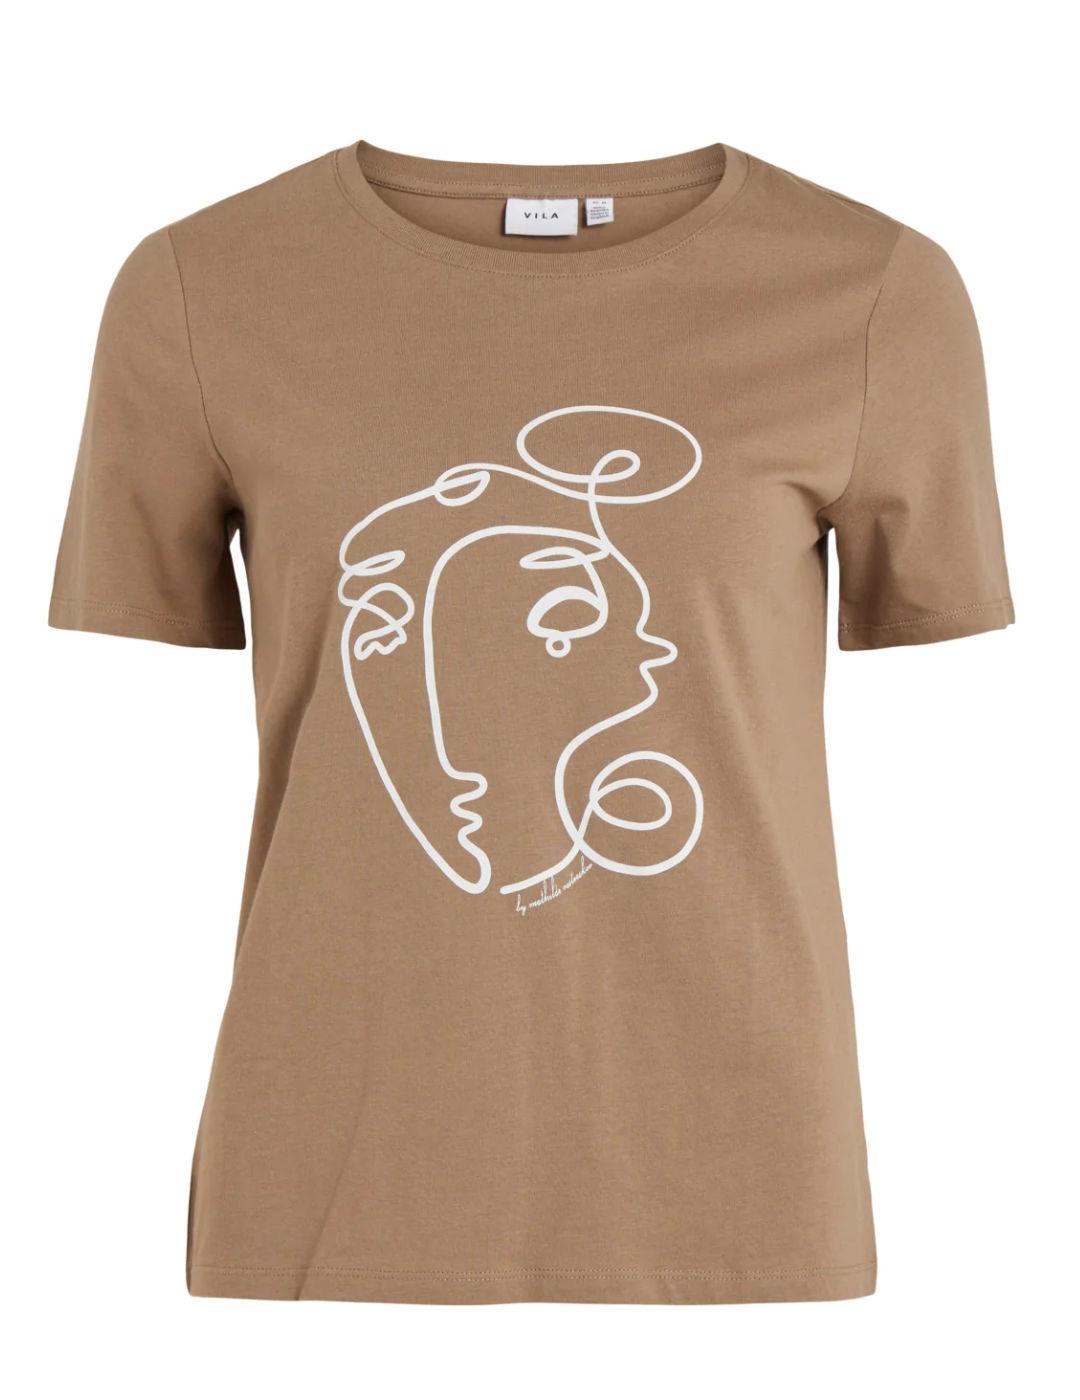 Camiseta Vila Mattea camel de manga corta para mujer